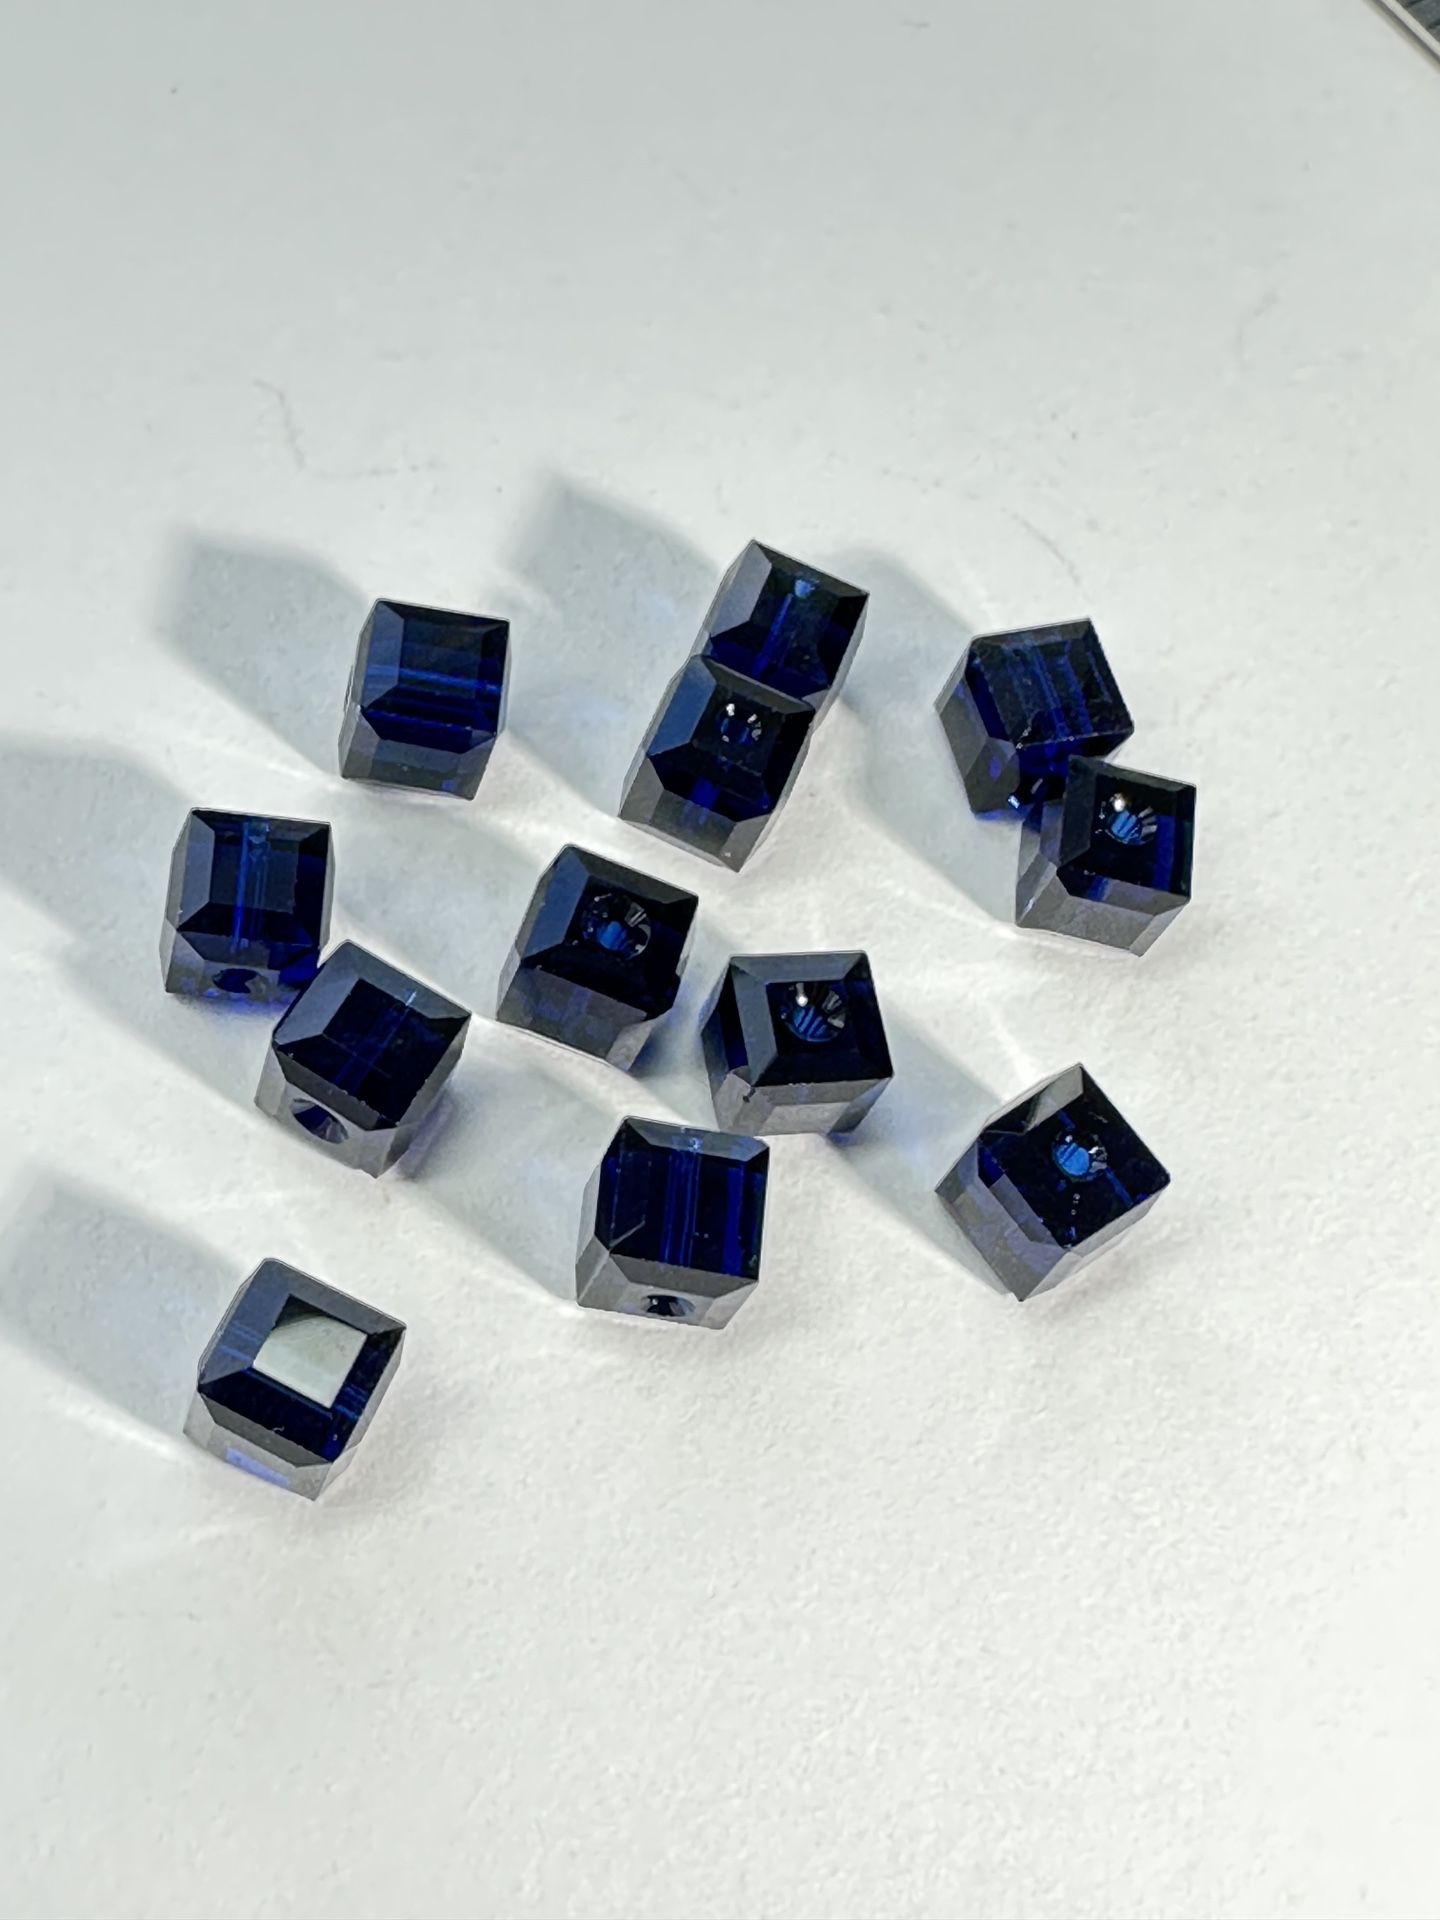 Swarovski Beads Crystal Jewelry Supplies Crafts 